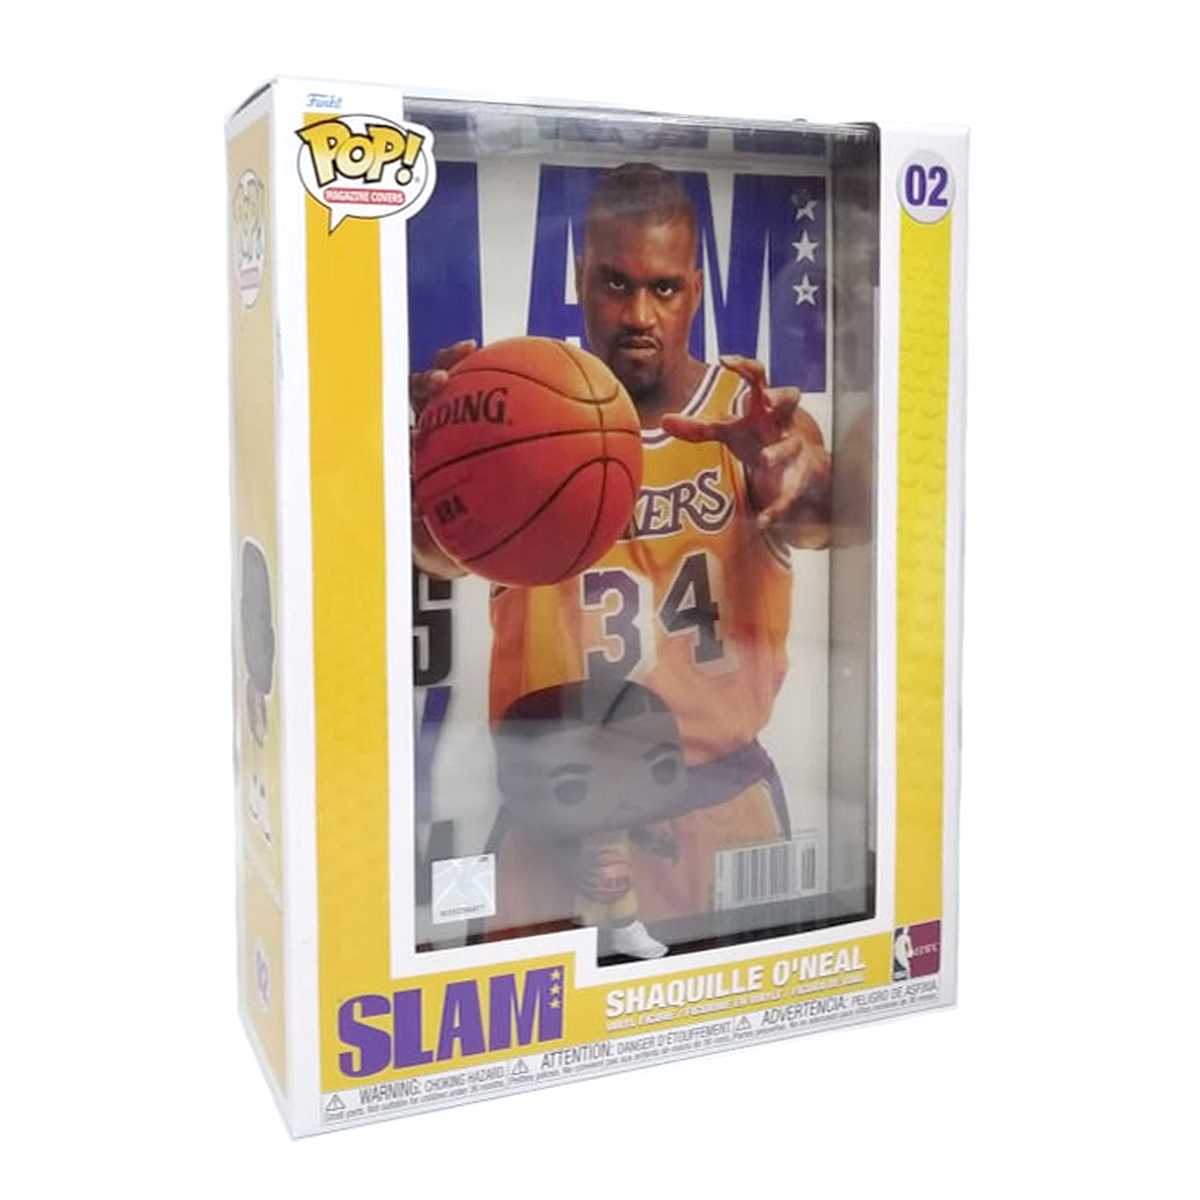 Estátua Colecionável Kobe Bryant: Los Angeles Lakers Basquete NBA